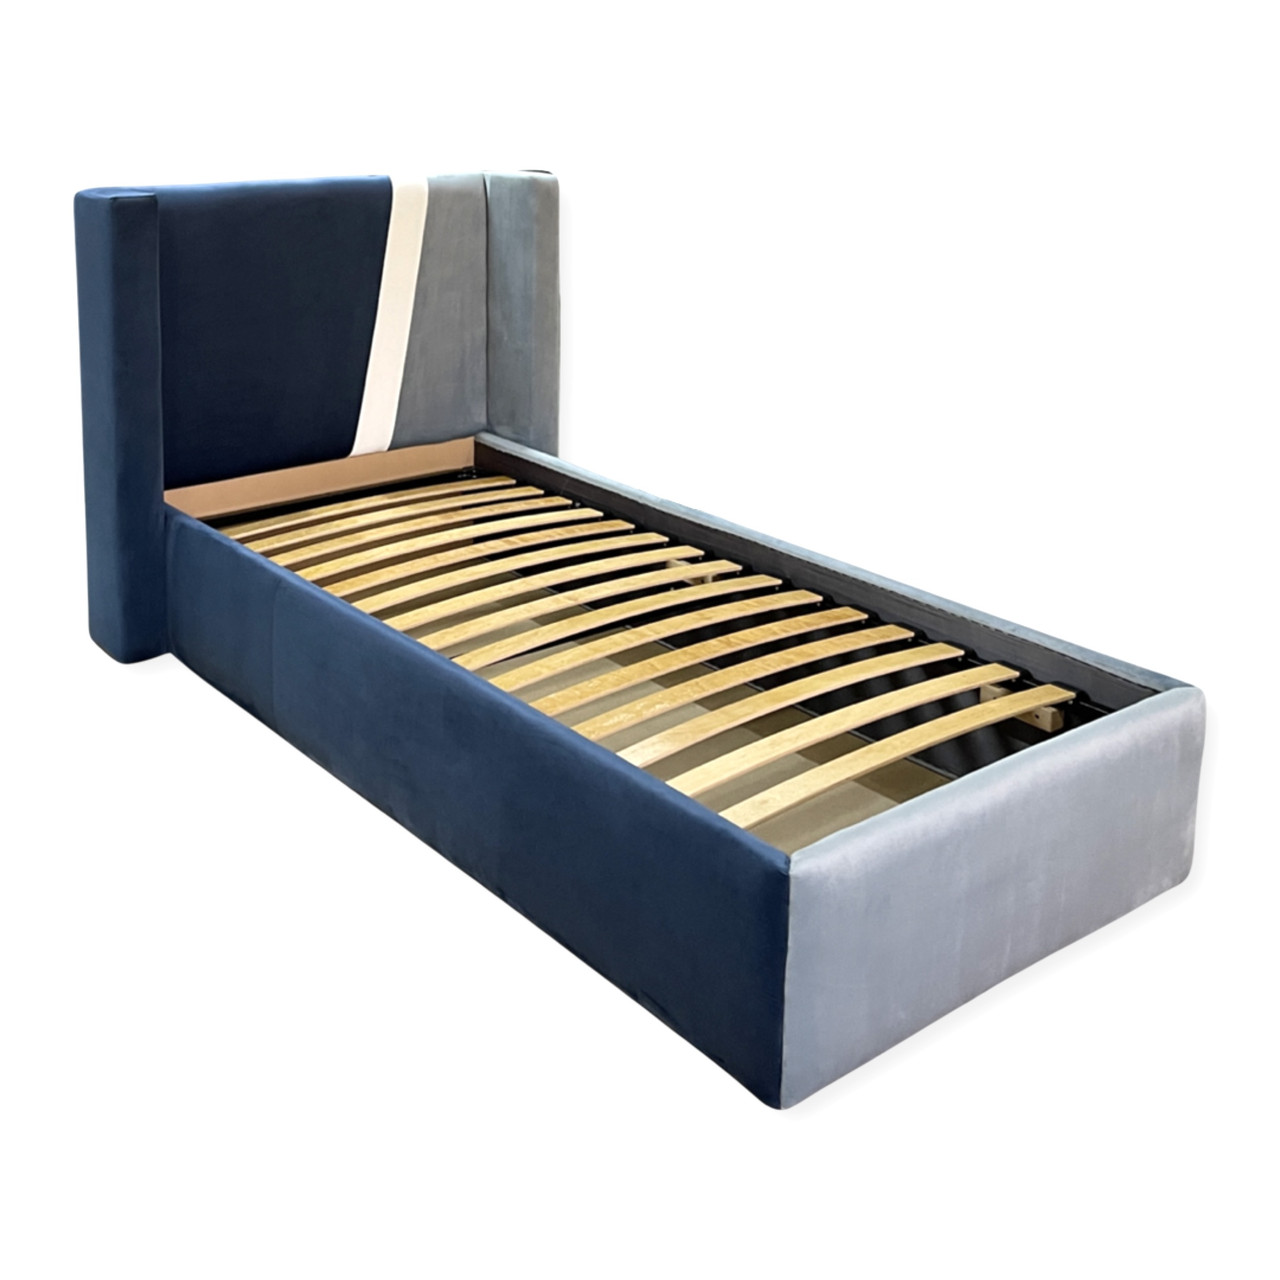 М'яке дизайнерське ліжко дитяче підліткове MeBelle MALFIE 160х190 двоспальне, різні кольори, велюр